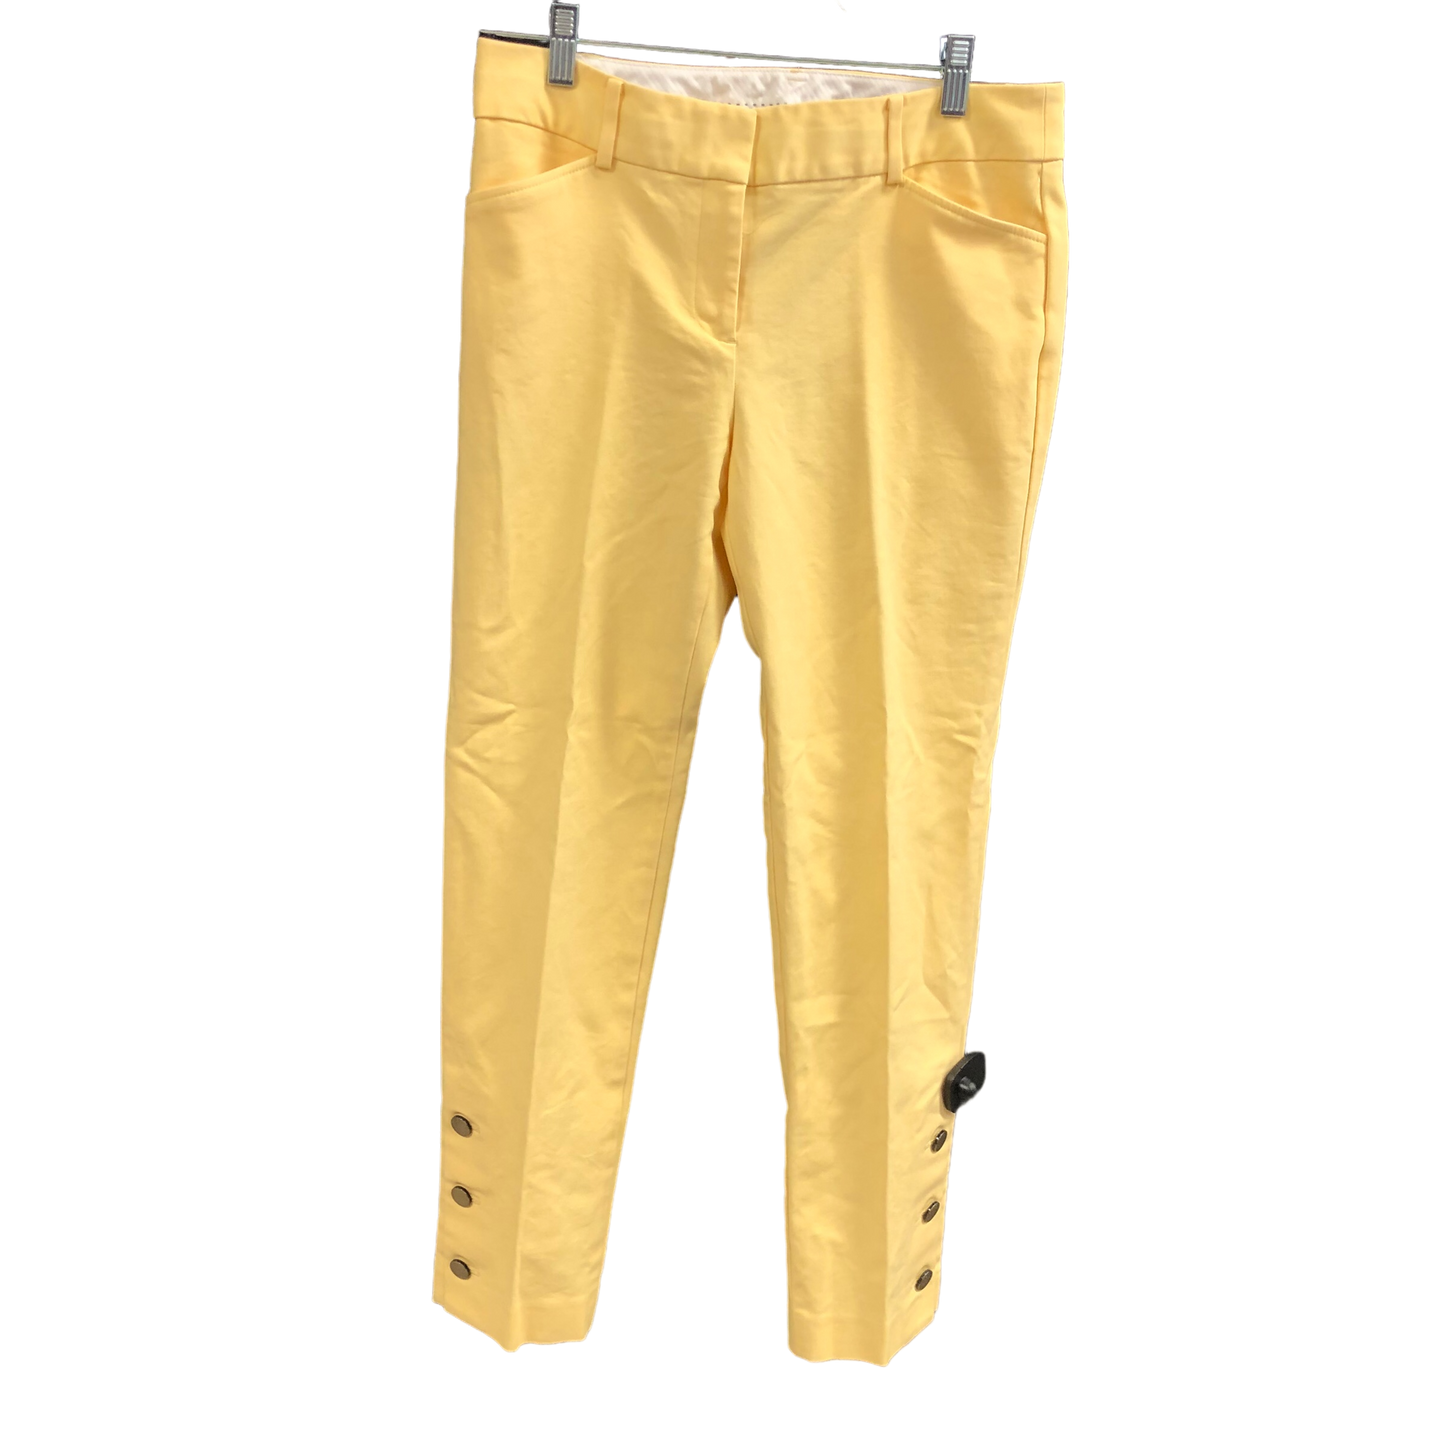 Yellow Pants Dress Talbots, Size 4